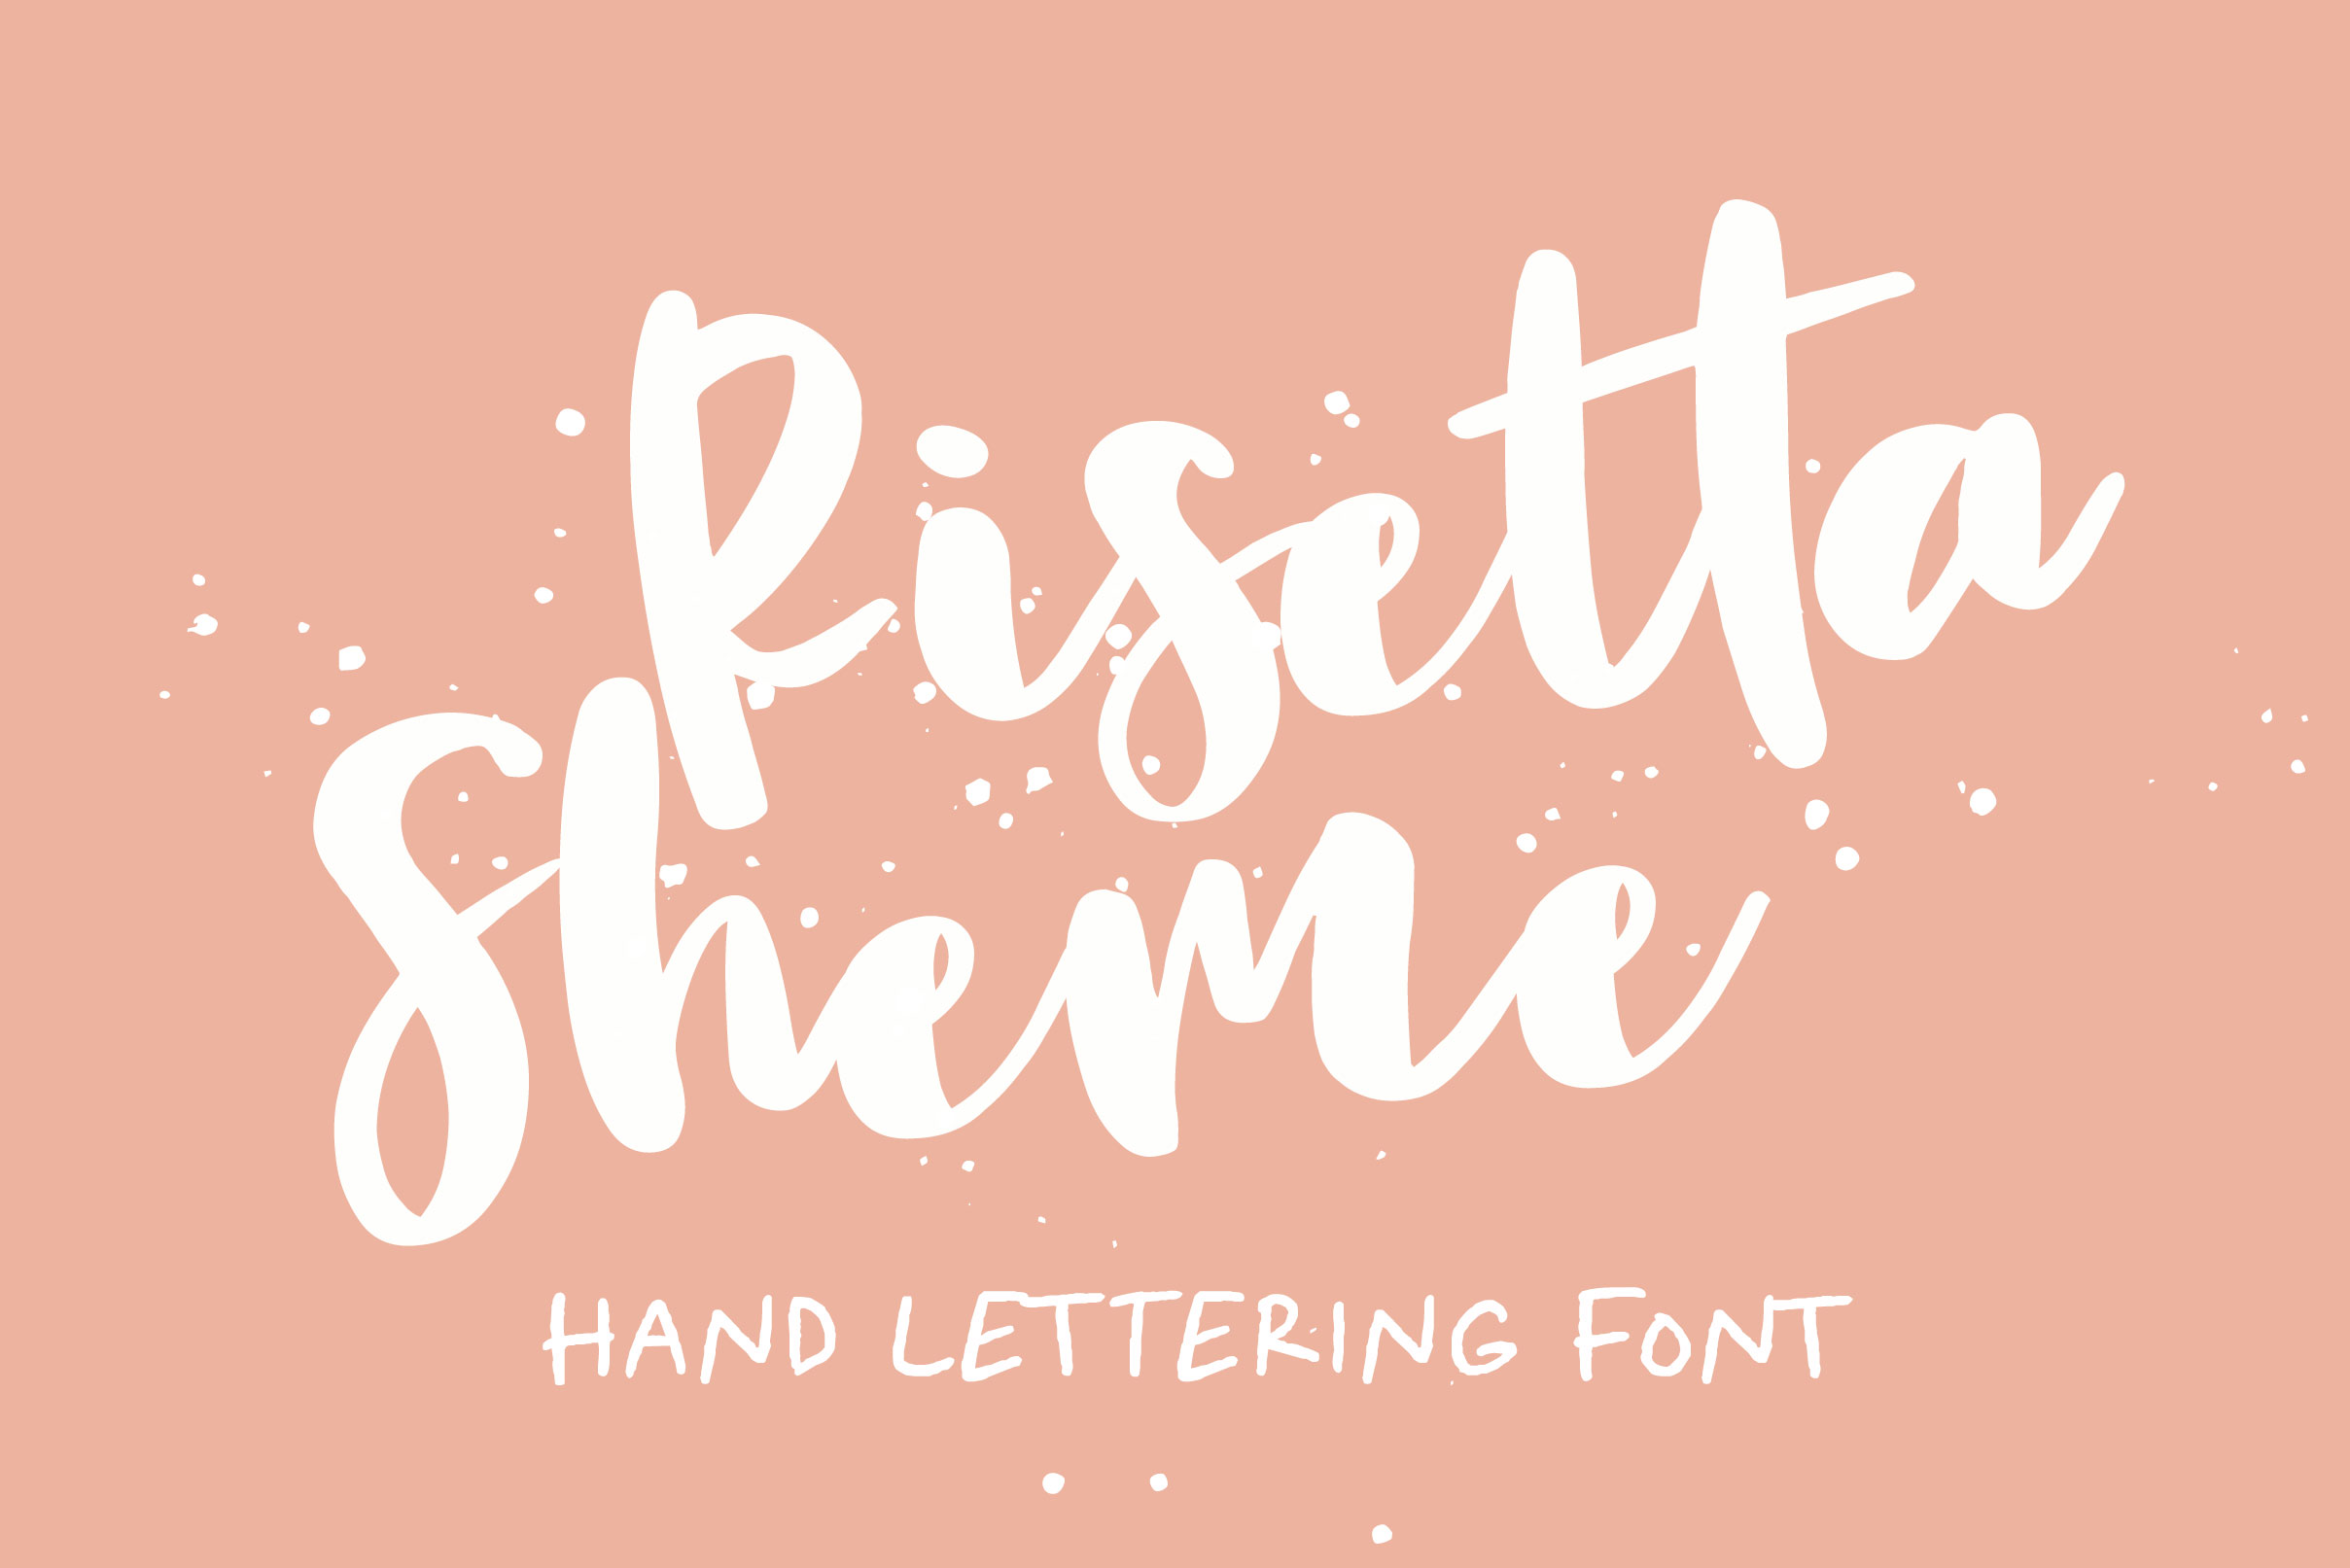 Risetta Sheme Script Font